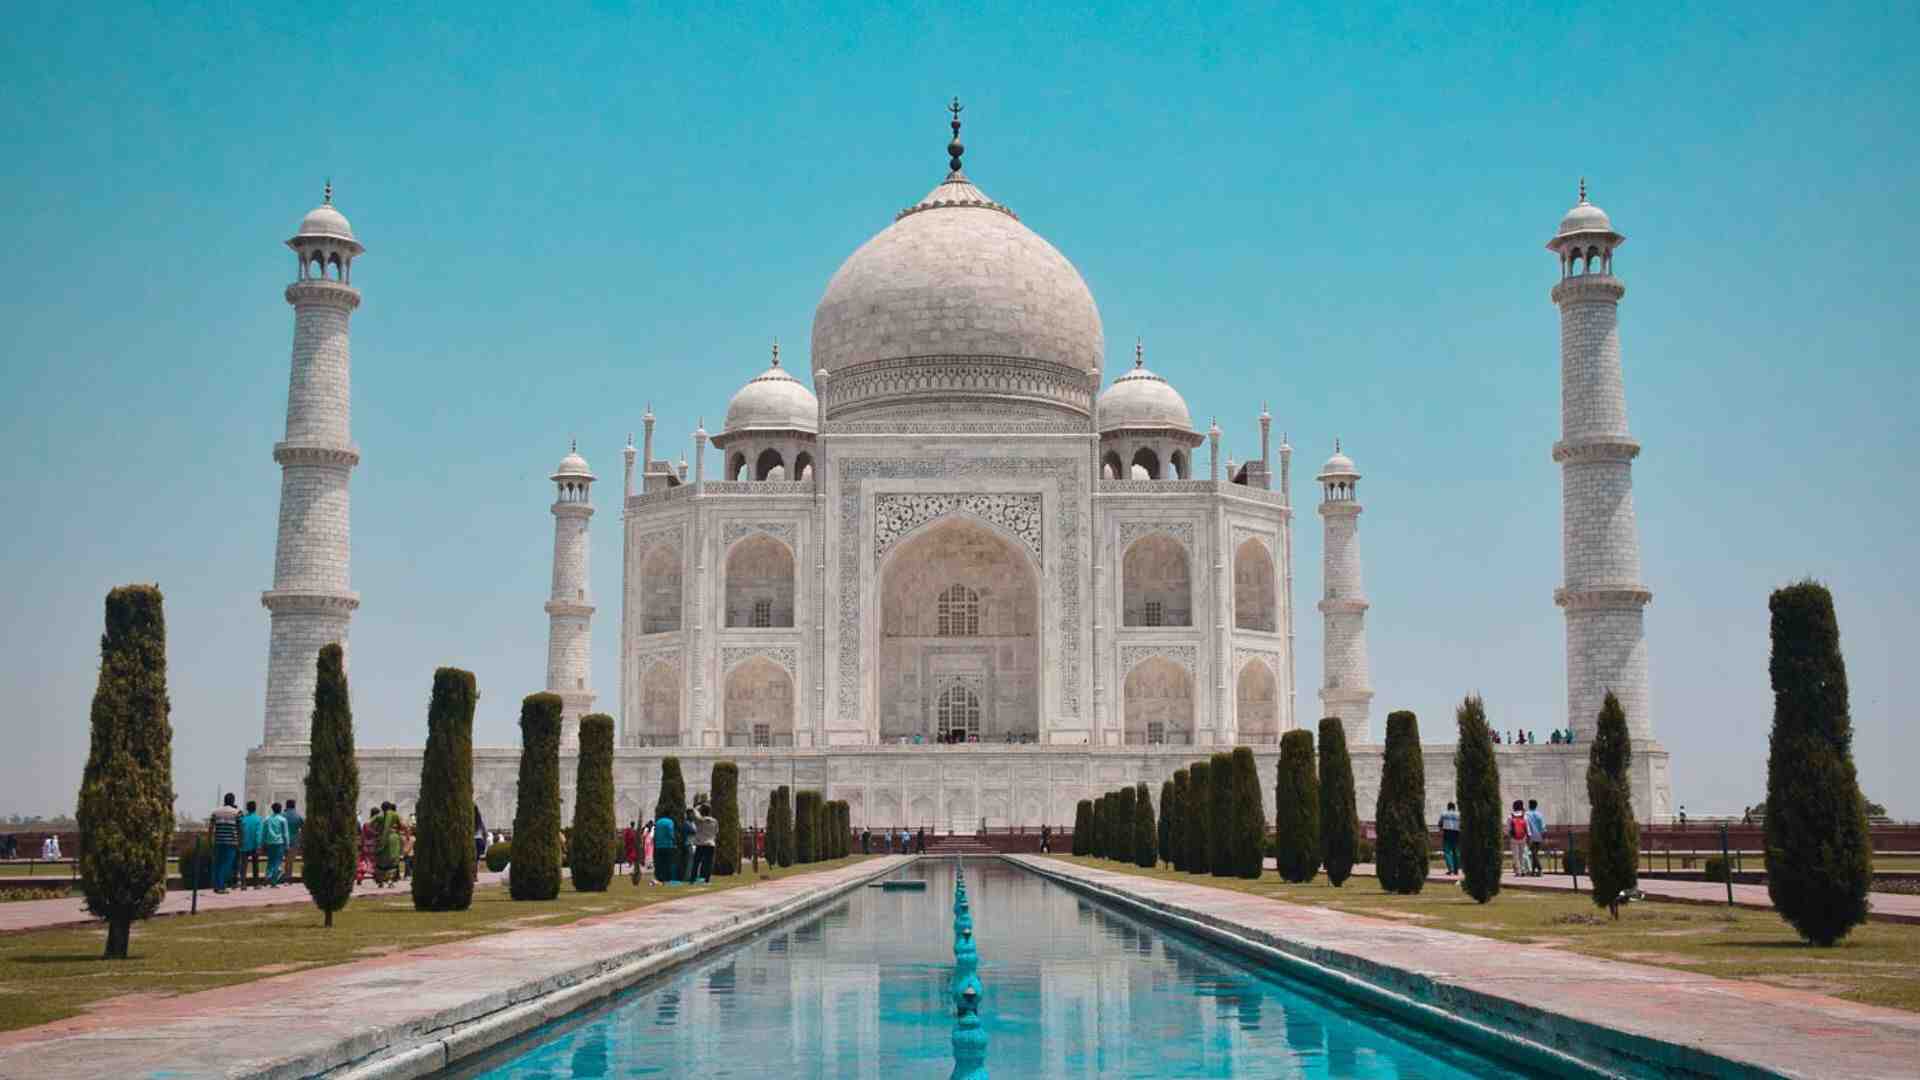 No entry fee to Taj Mahal on World Heritage Day